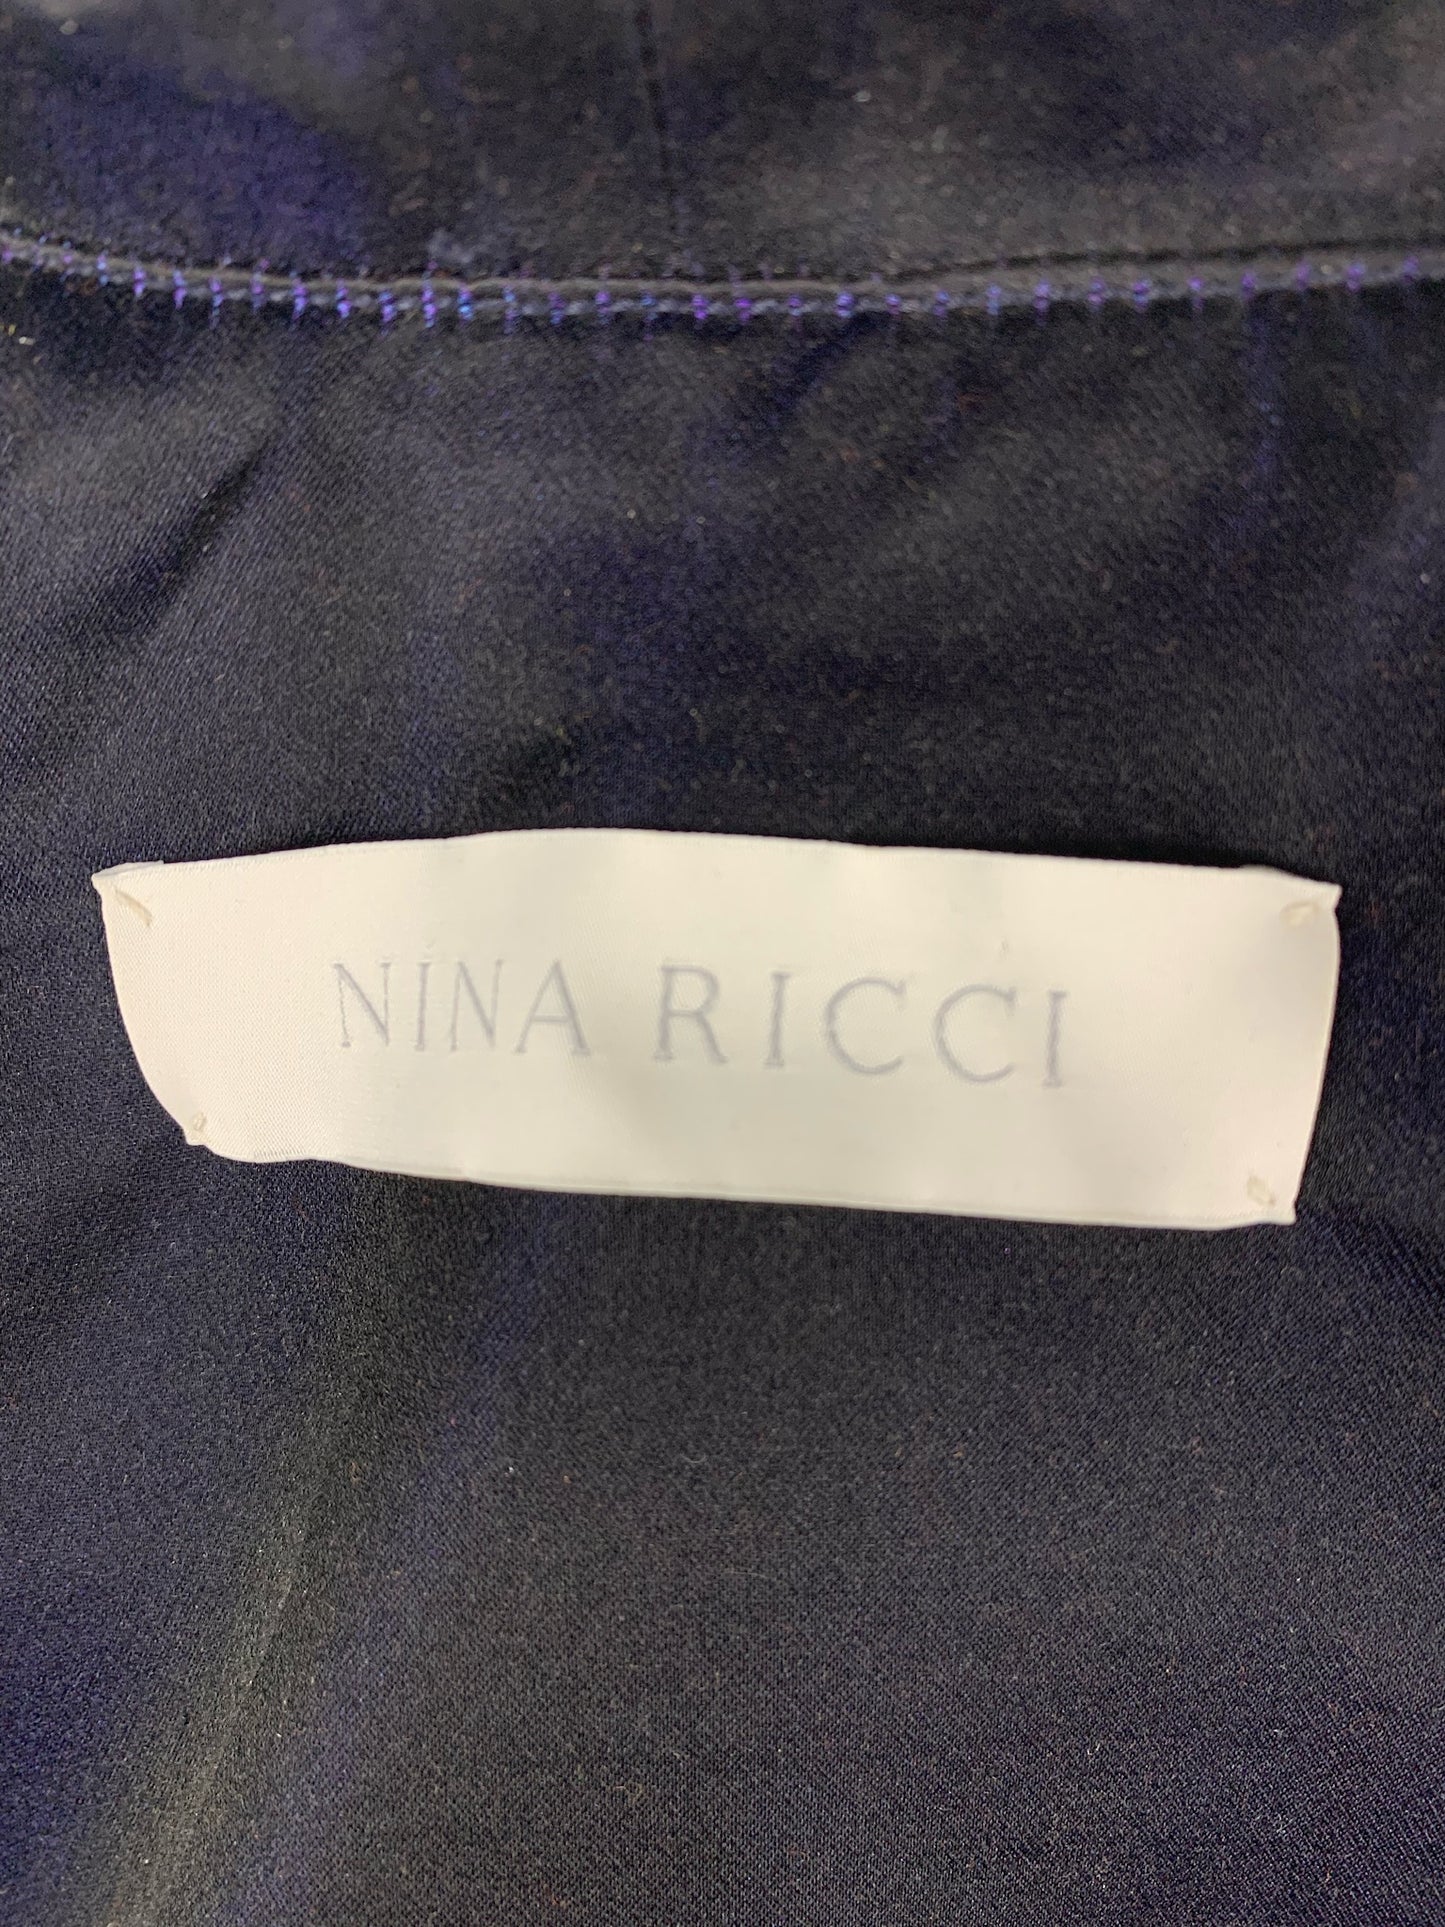 Nina Ricci Iridescent Navy Blue Structured Blazer